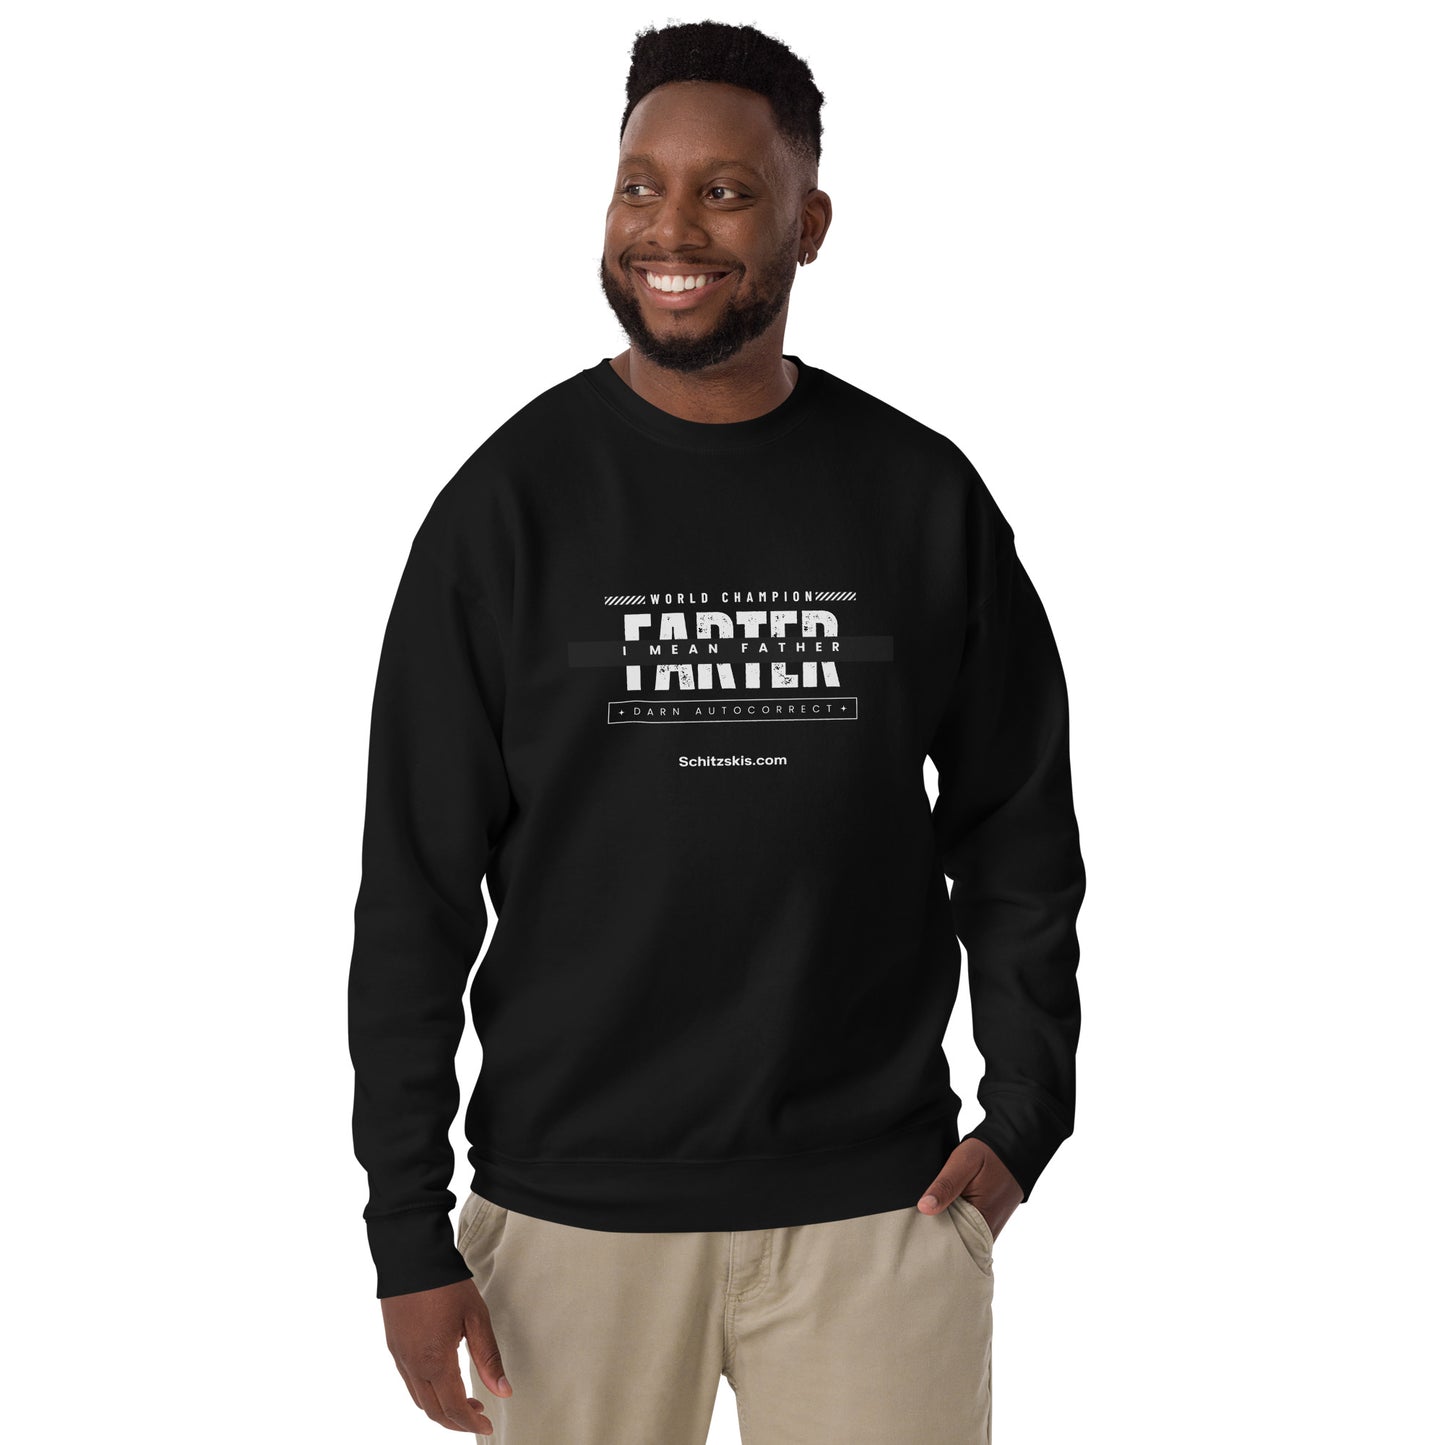 World Champion Premium Sweatshirt in black color on black male model front view